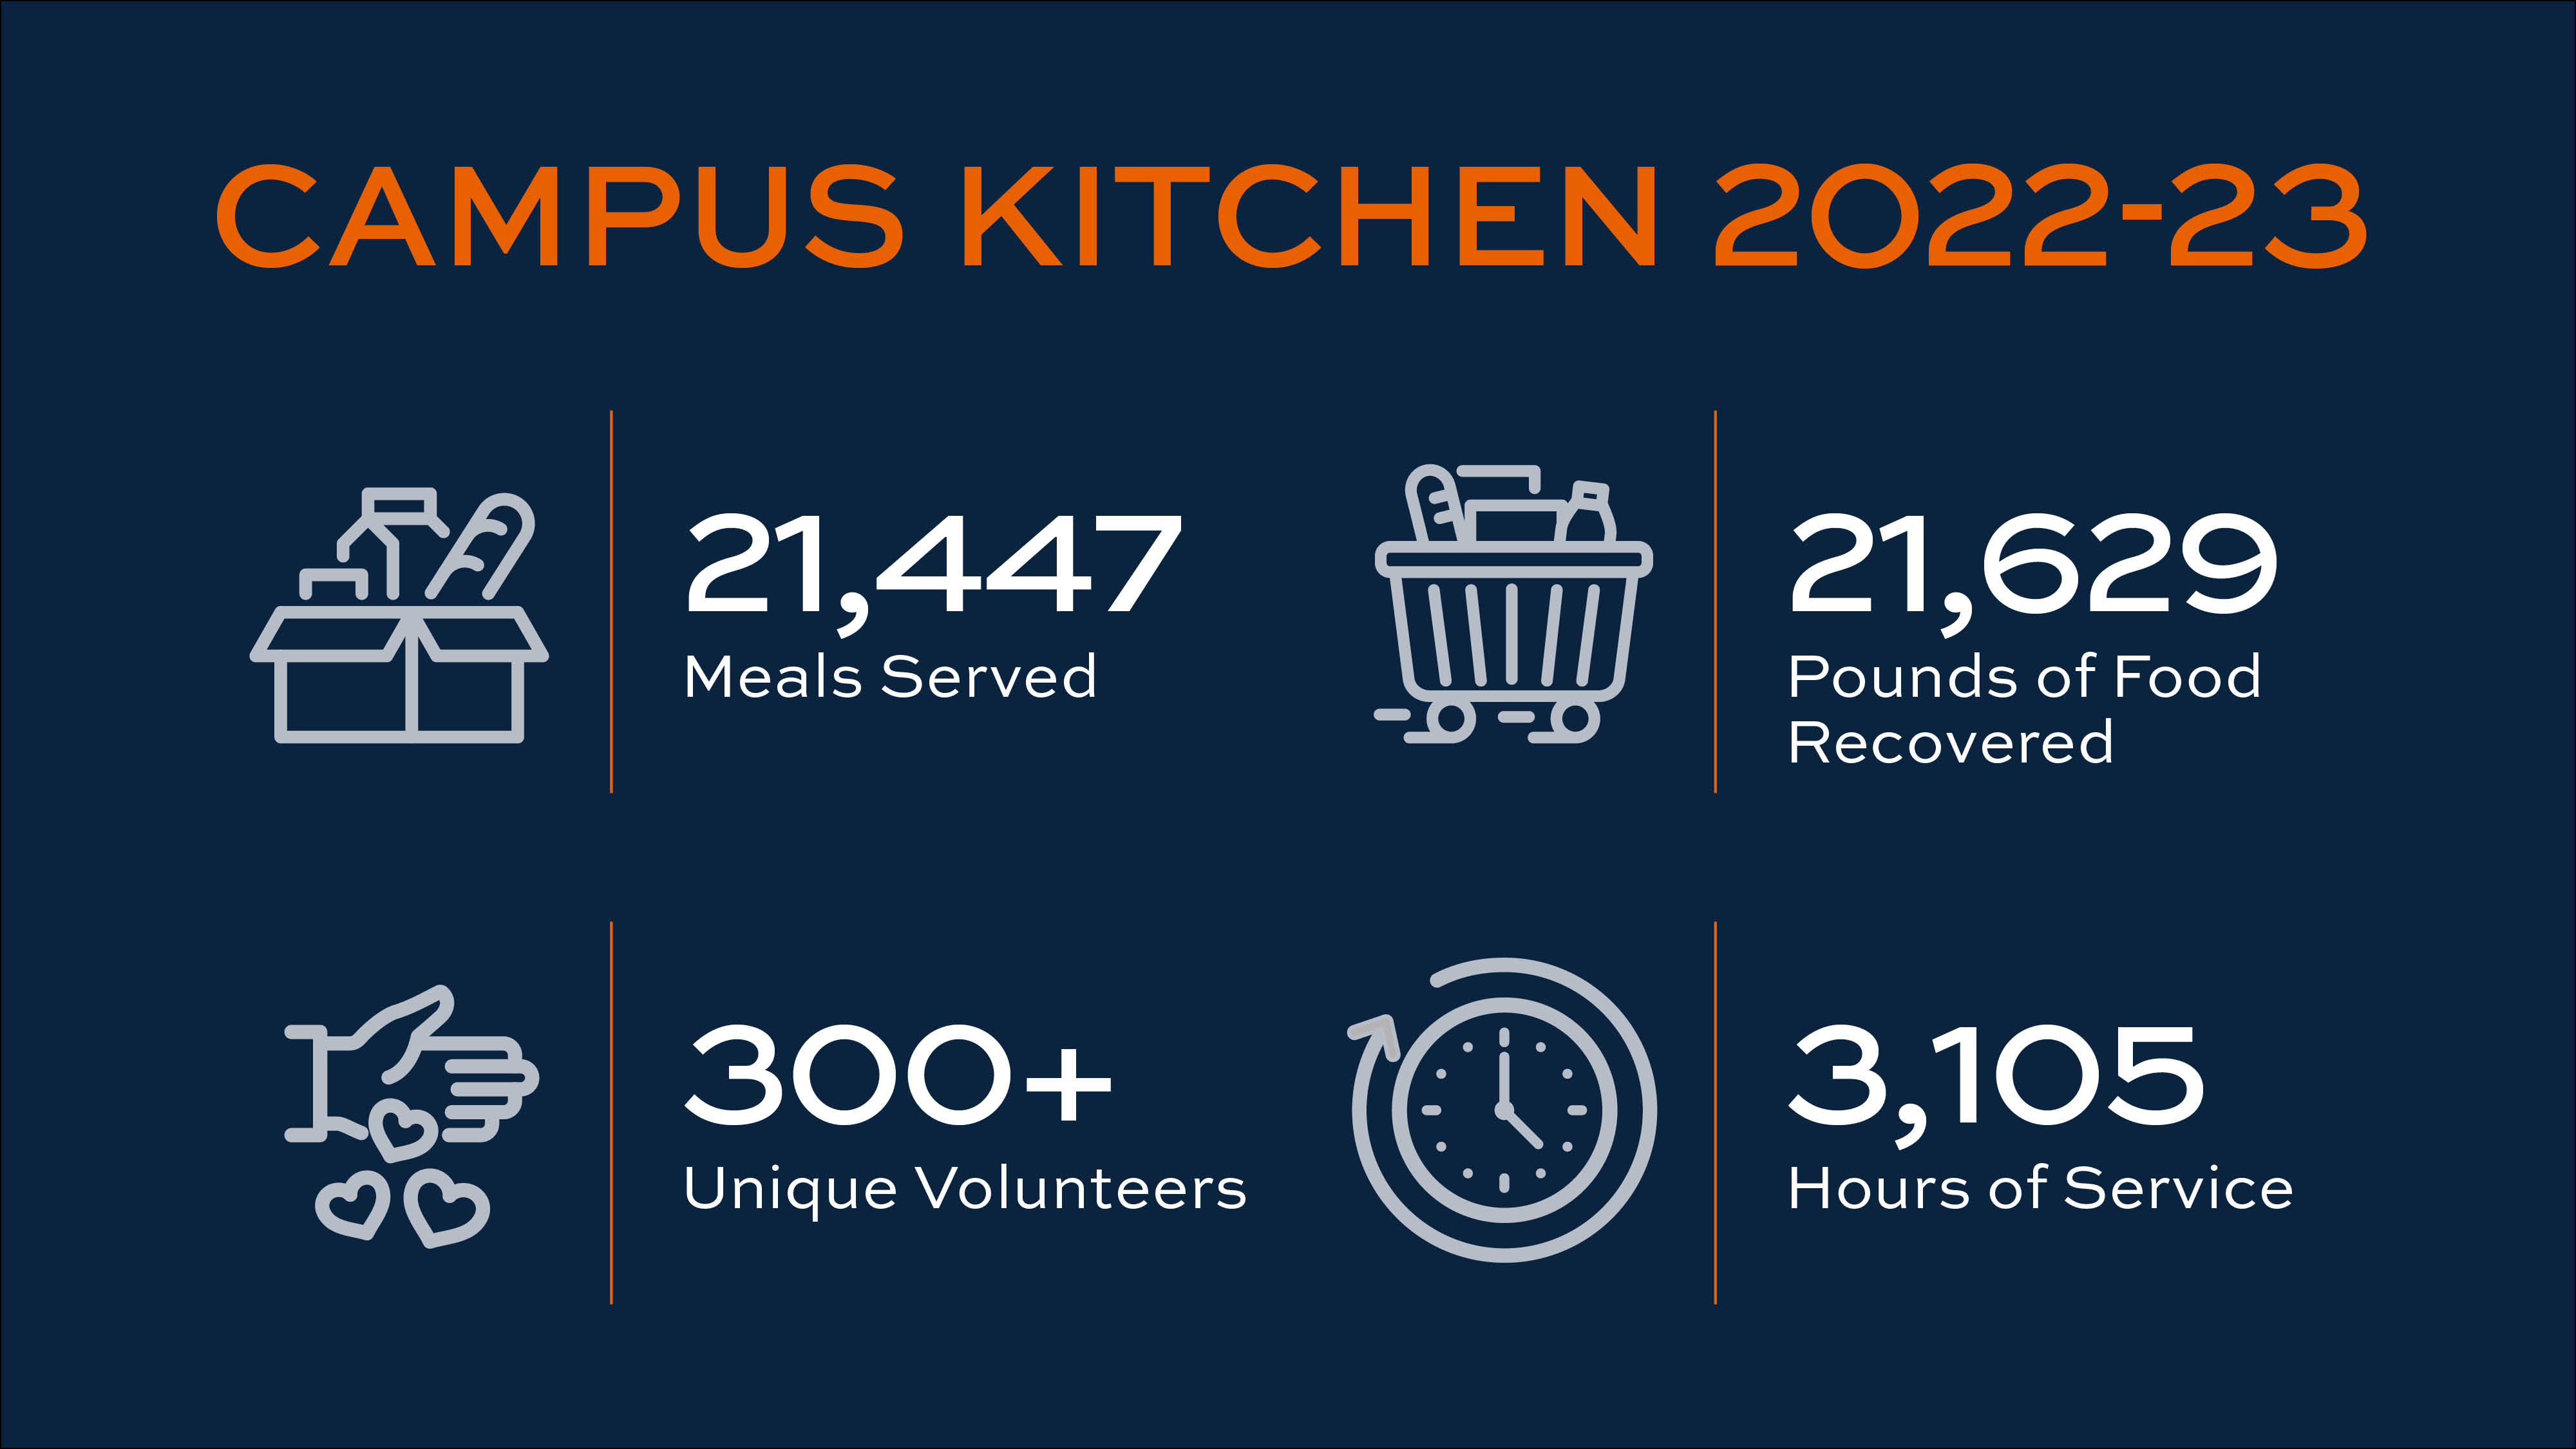 an information graphic about Campus Kitchen